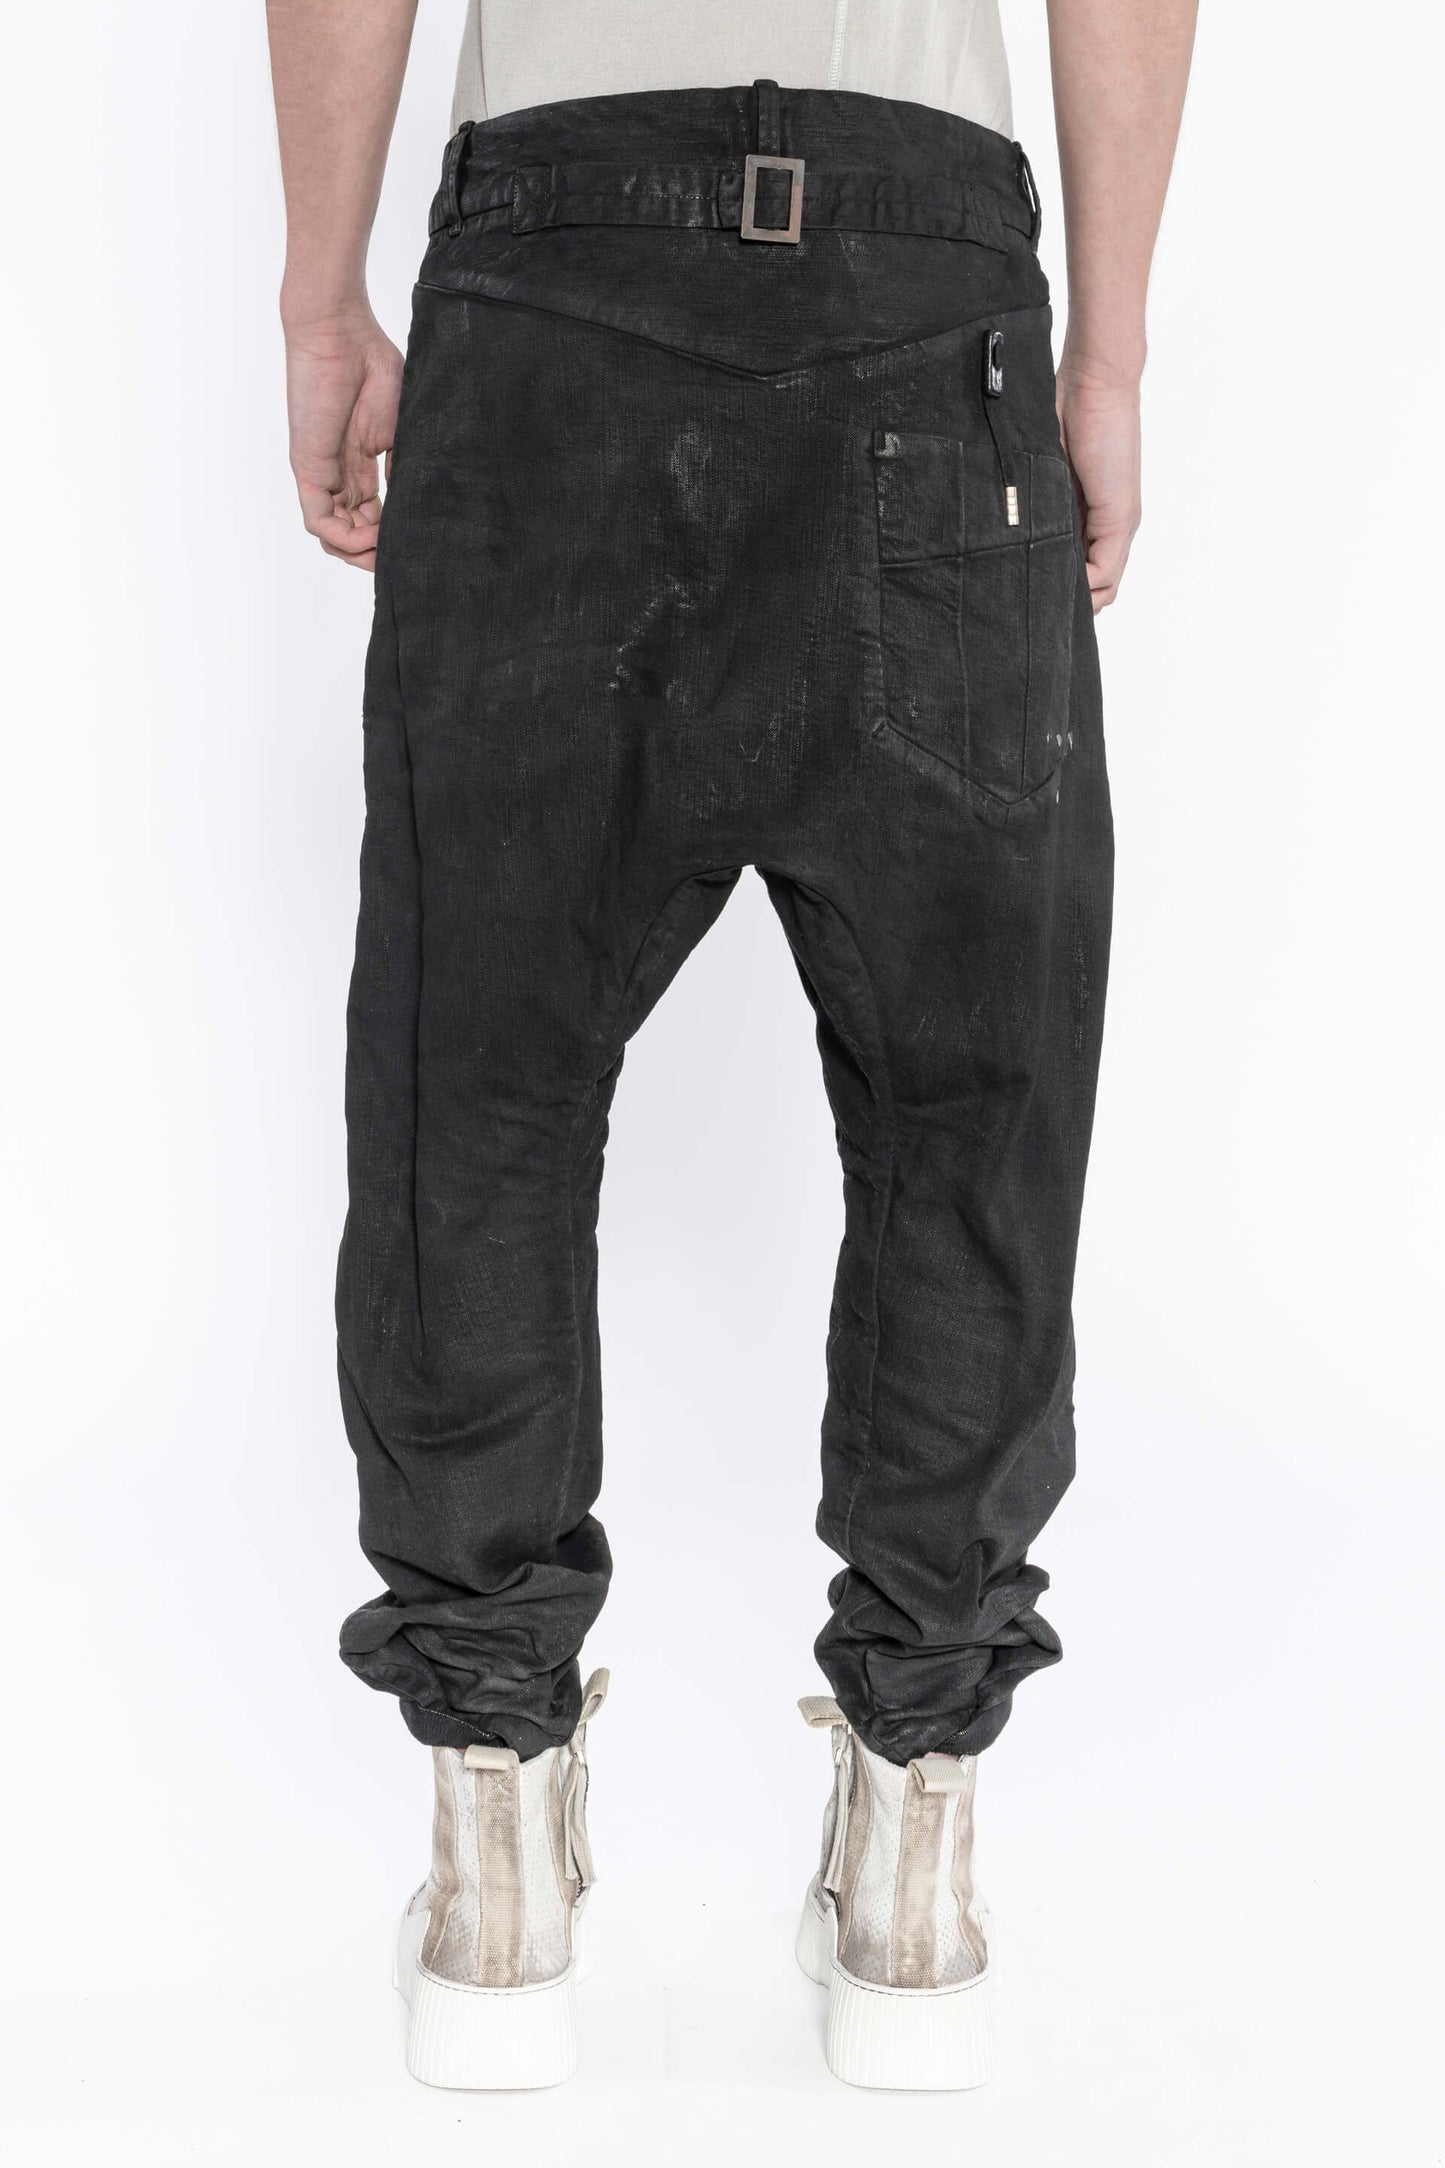 Black Baggy Drop Crotch Workpants P15.1 BF